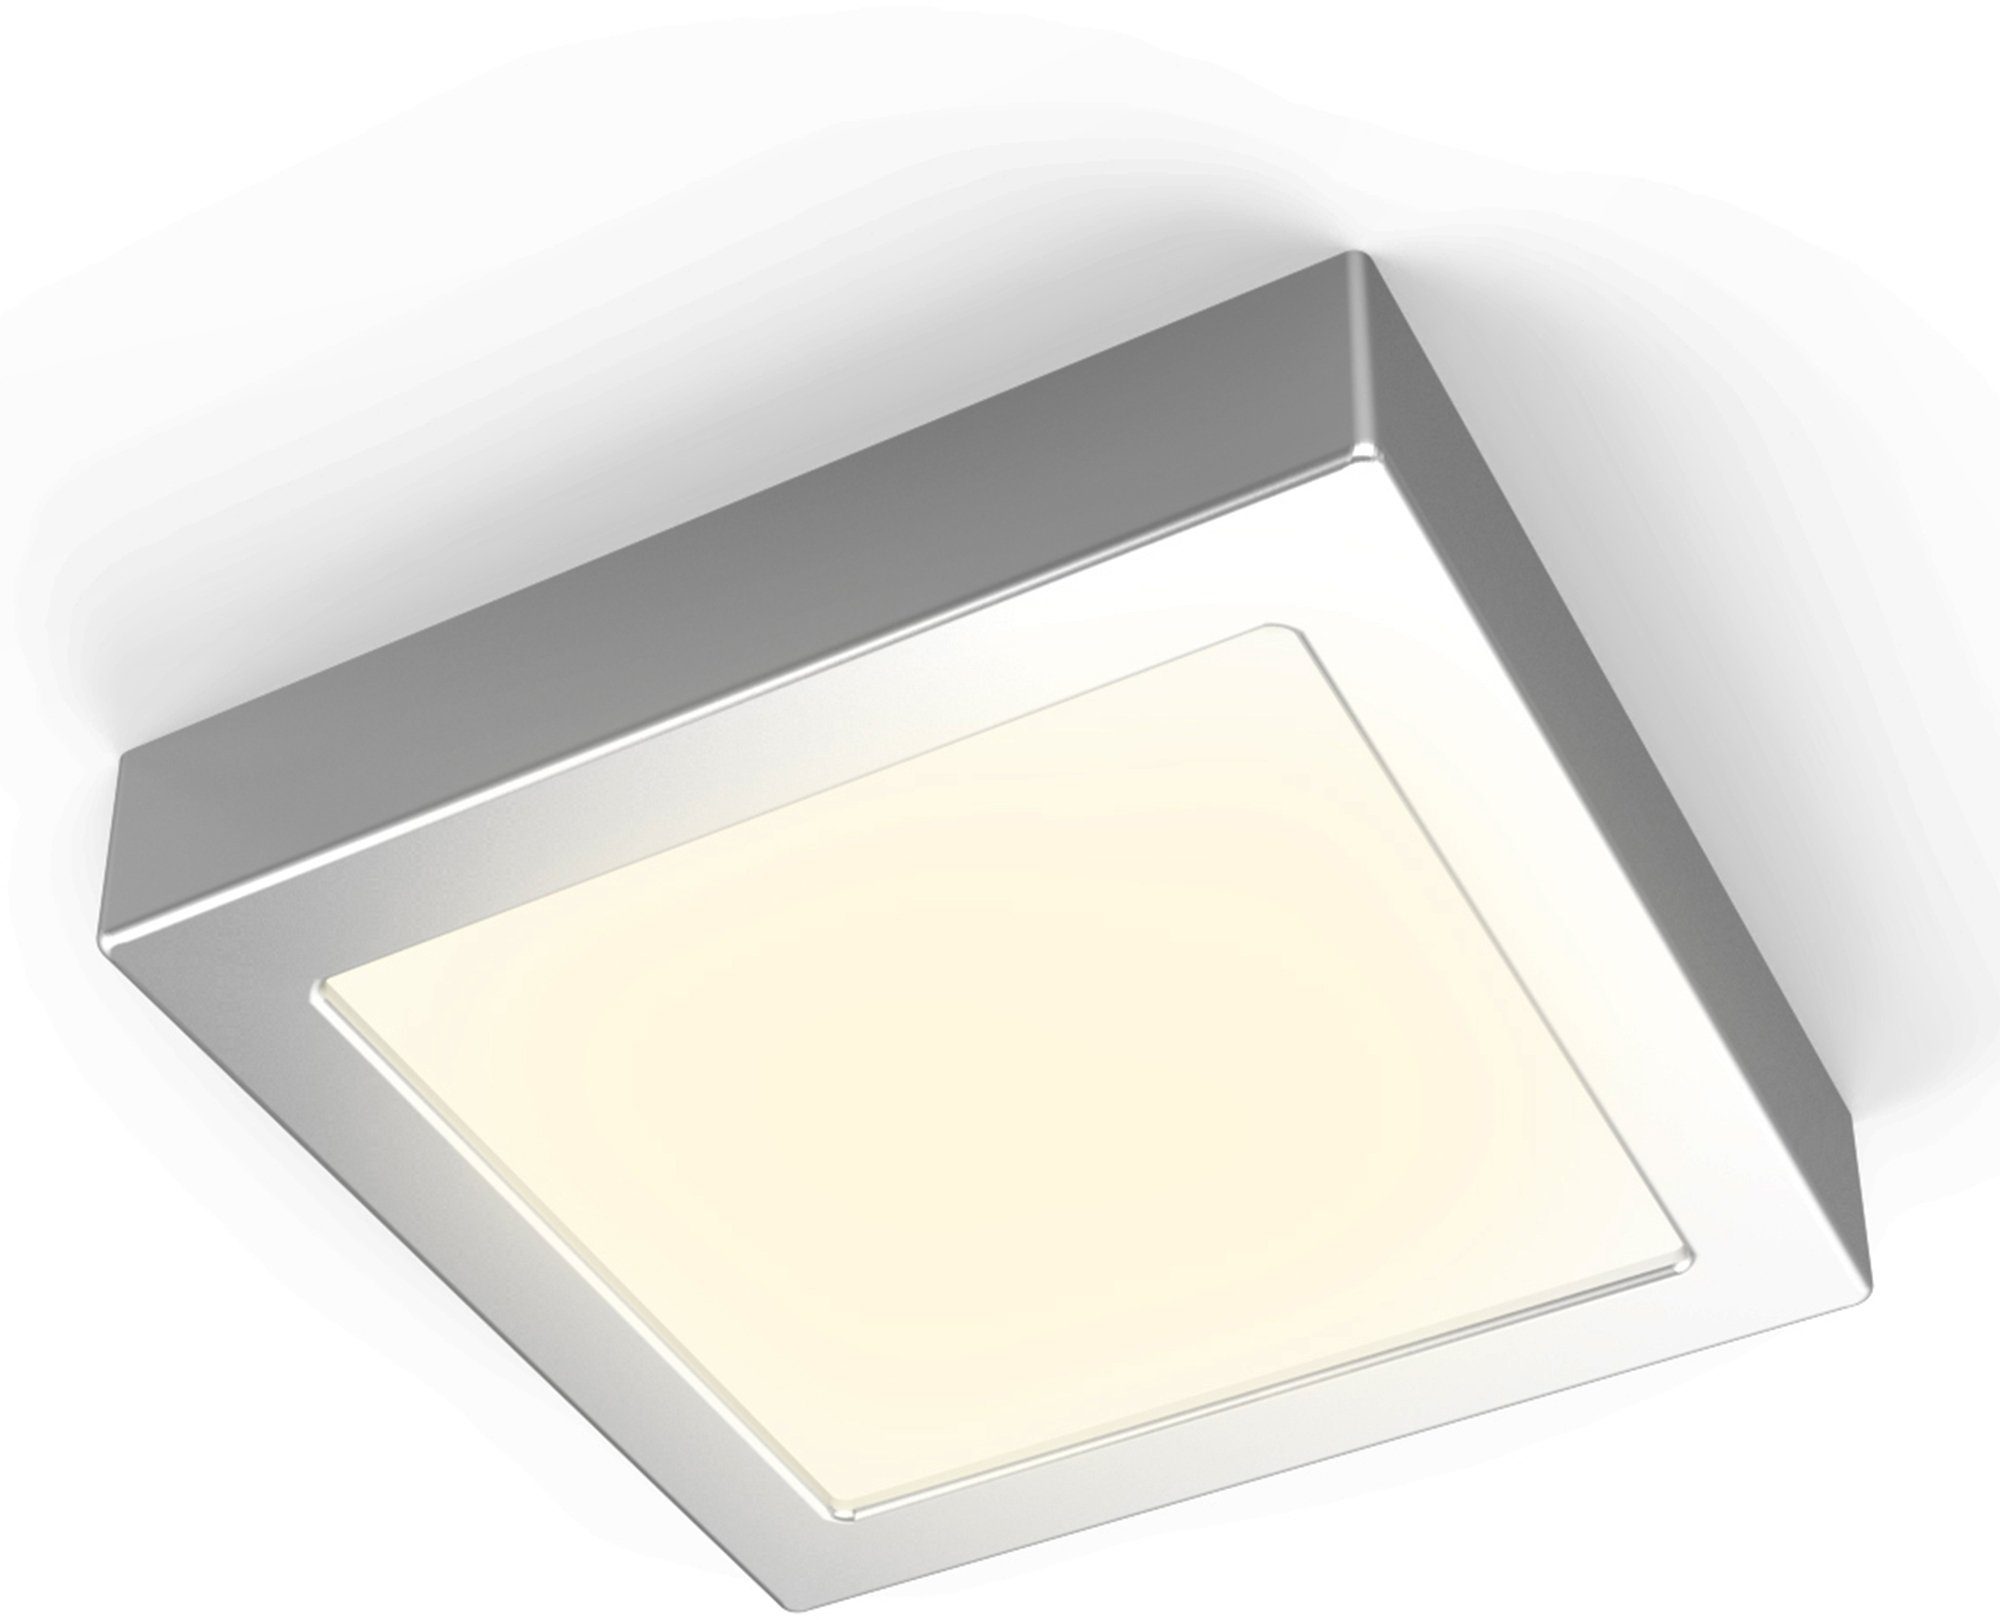 LED Aufbaustrahler 12W LED Lampe Garnet, Aufbauleuchte Warmweiß, B.K.Licht fest integriert, Unterbauleuchte LED Panel Aufputzspot